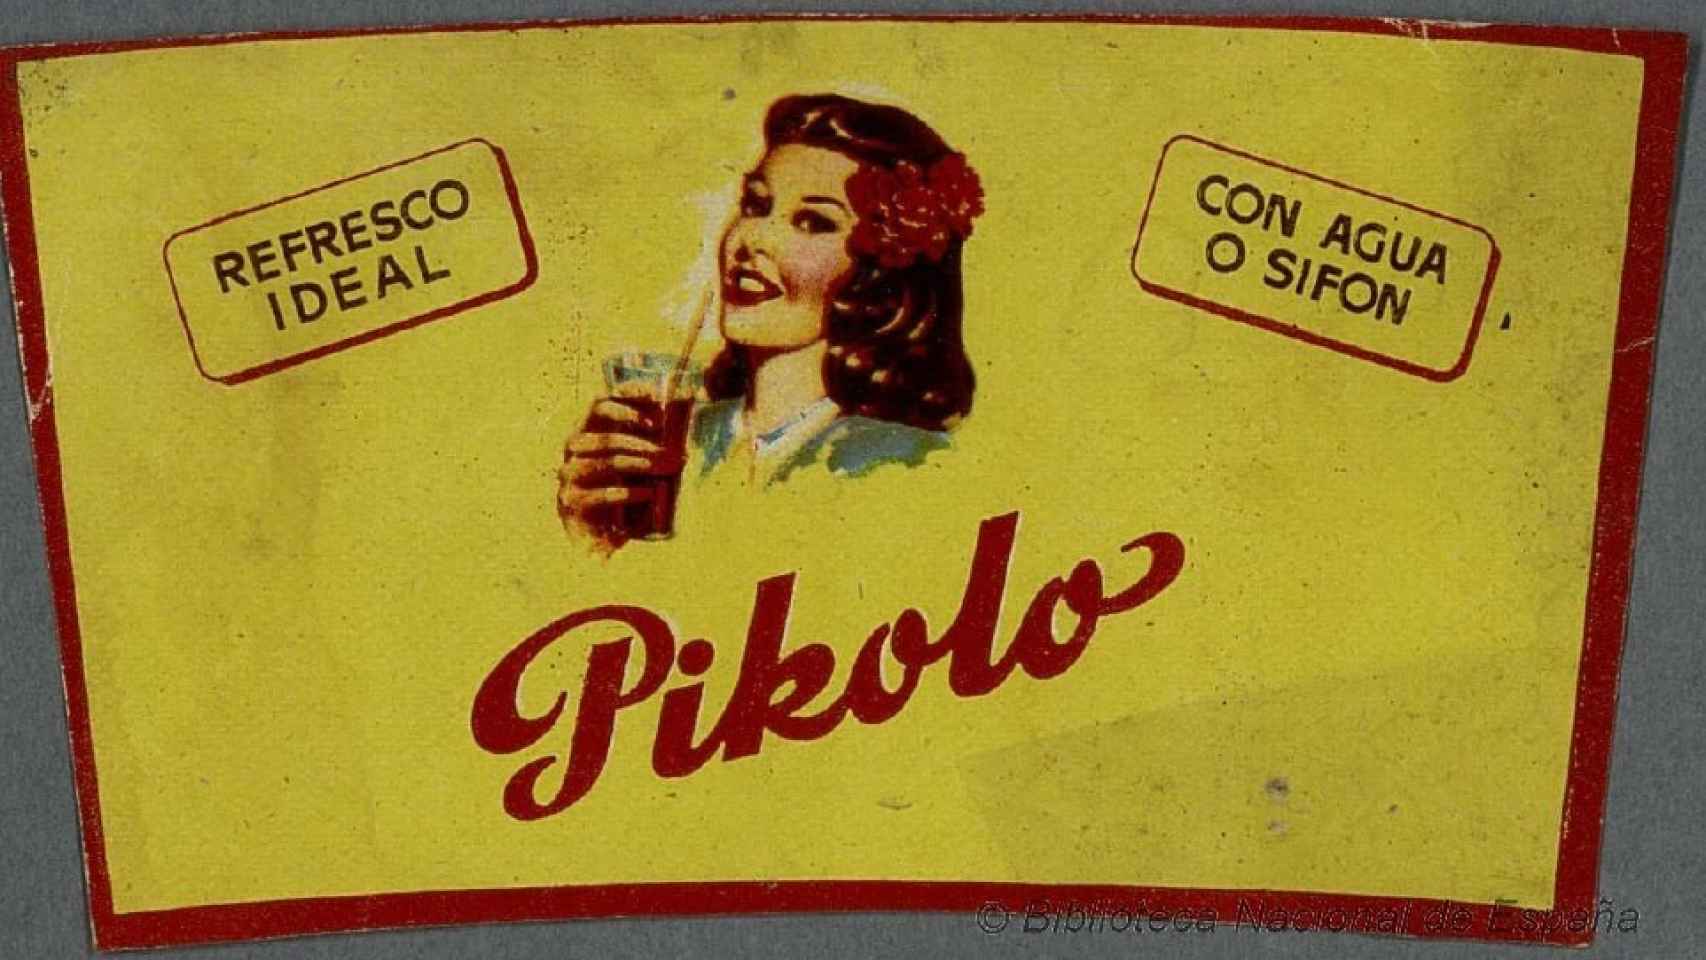 Etiqueta refresco Pikolo. Colección de la BNE.